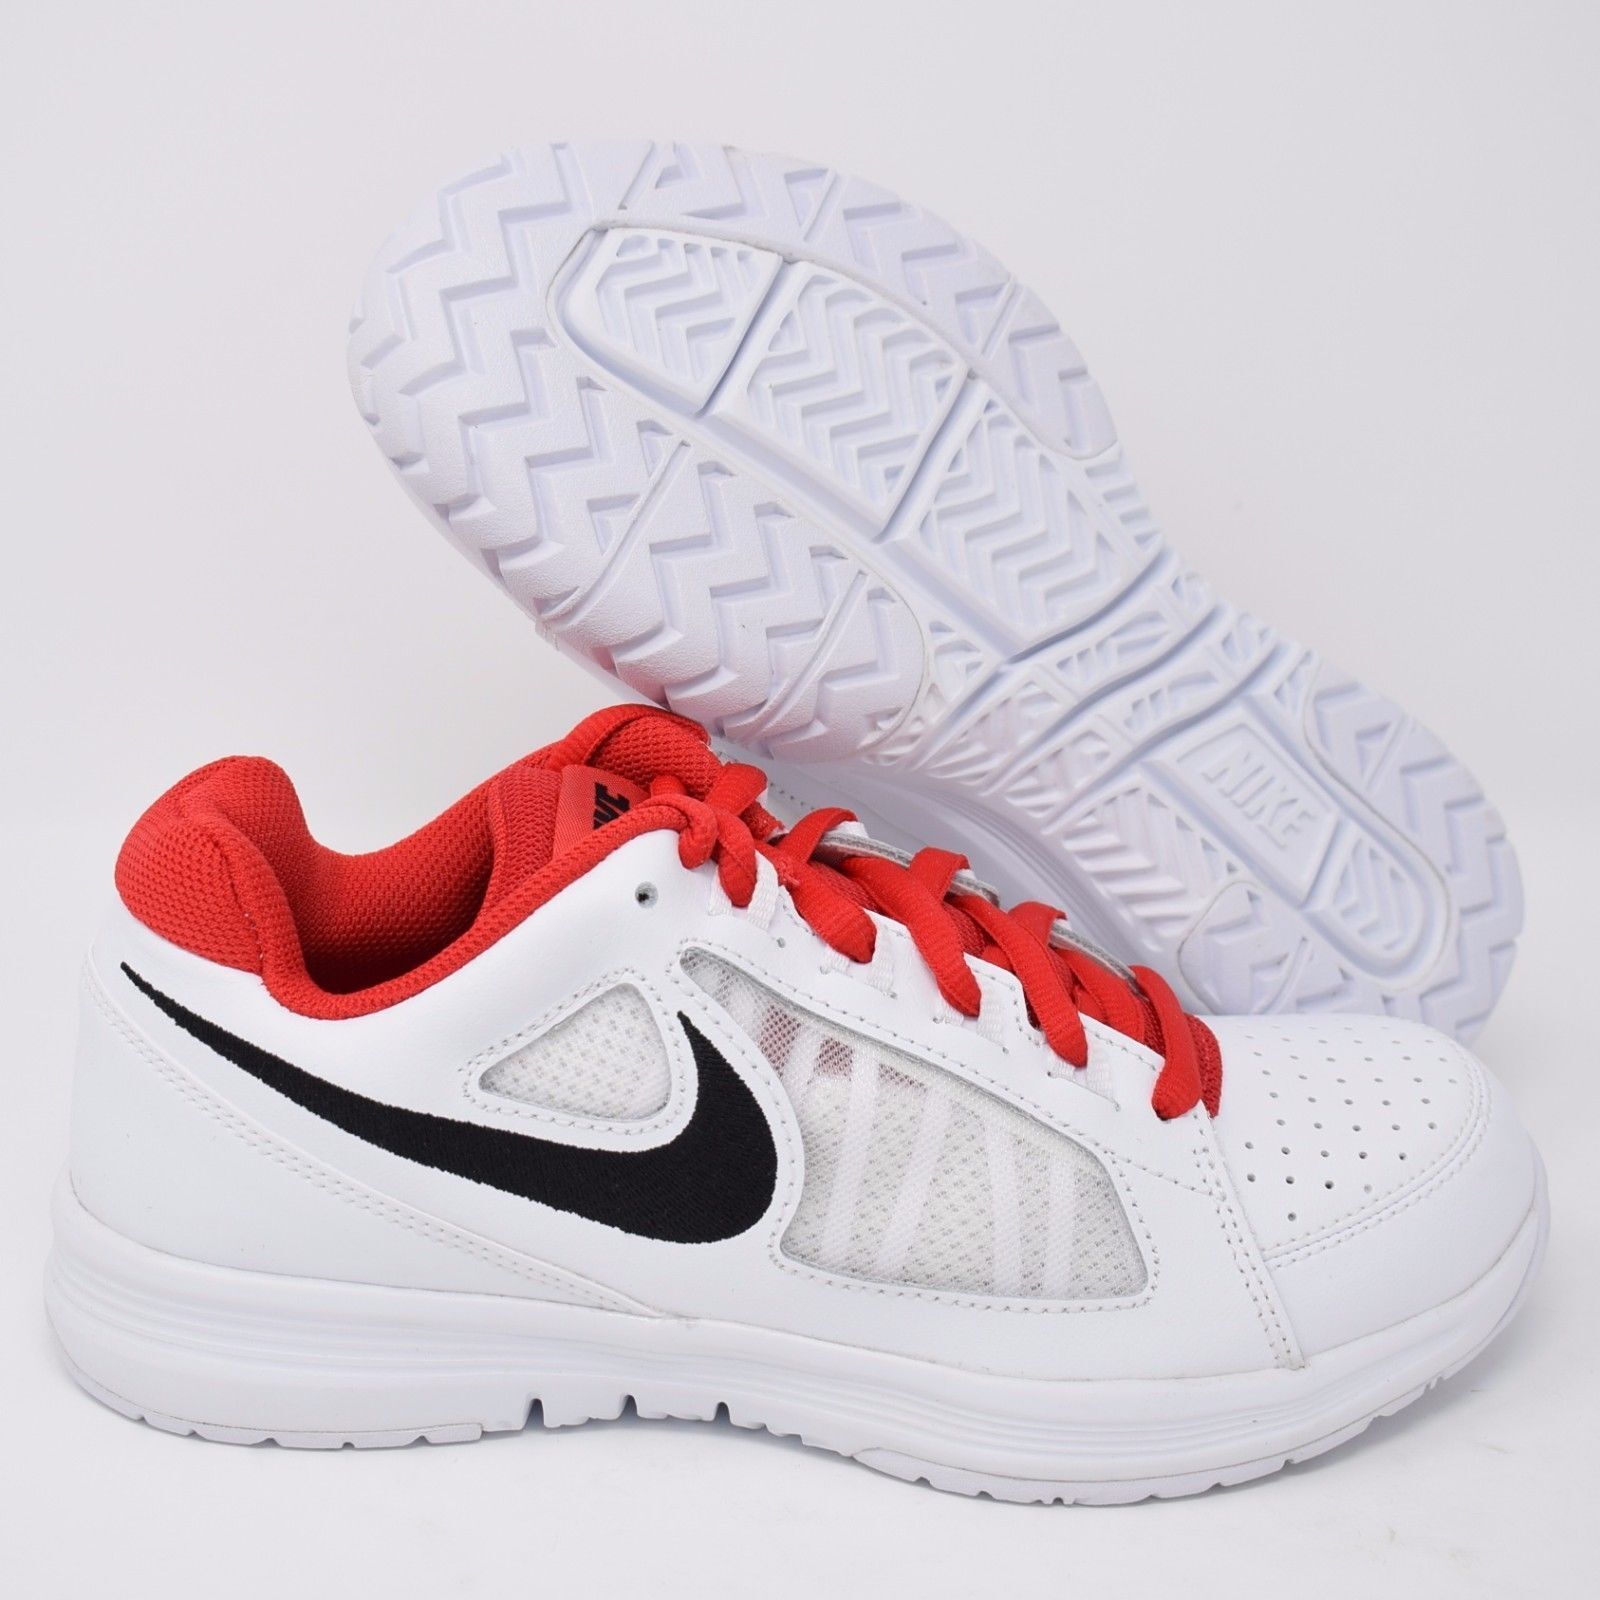 tire Oppose Straighten Nike Air Vapor Ace 724868-108 Mens Tennis Shoes White Black & Red